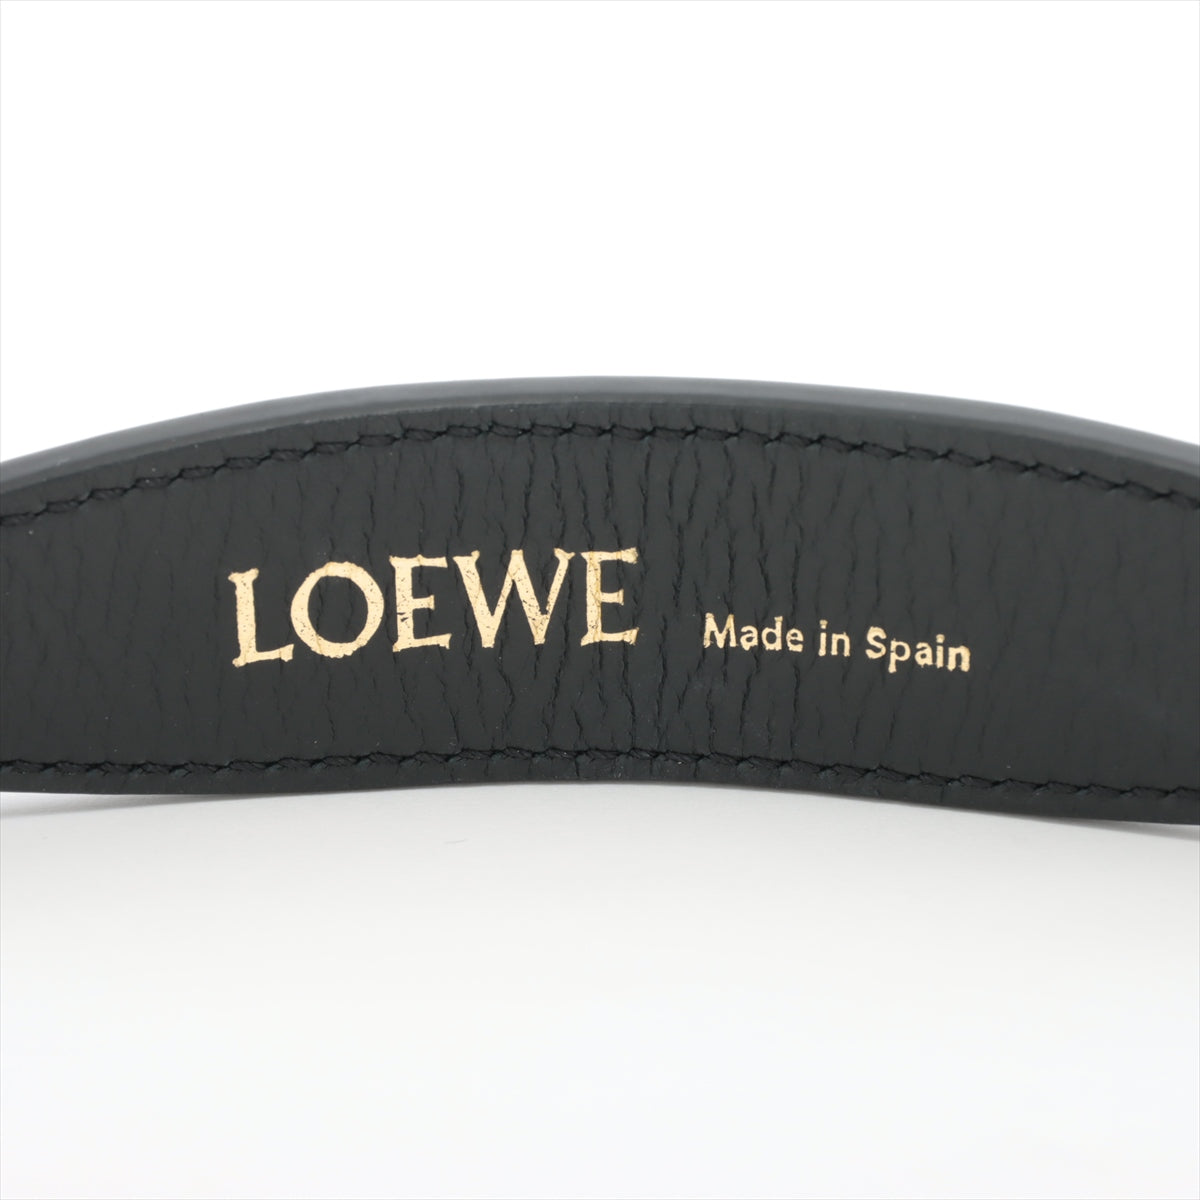 Loewe Strap calf Black branded short strap